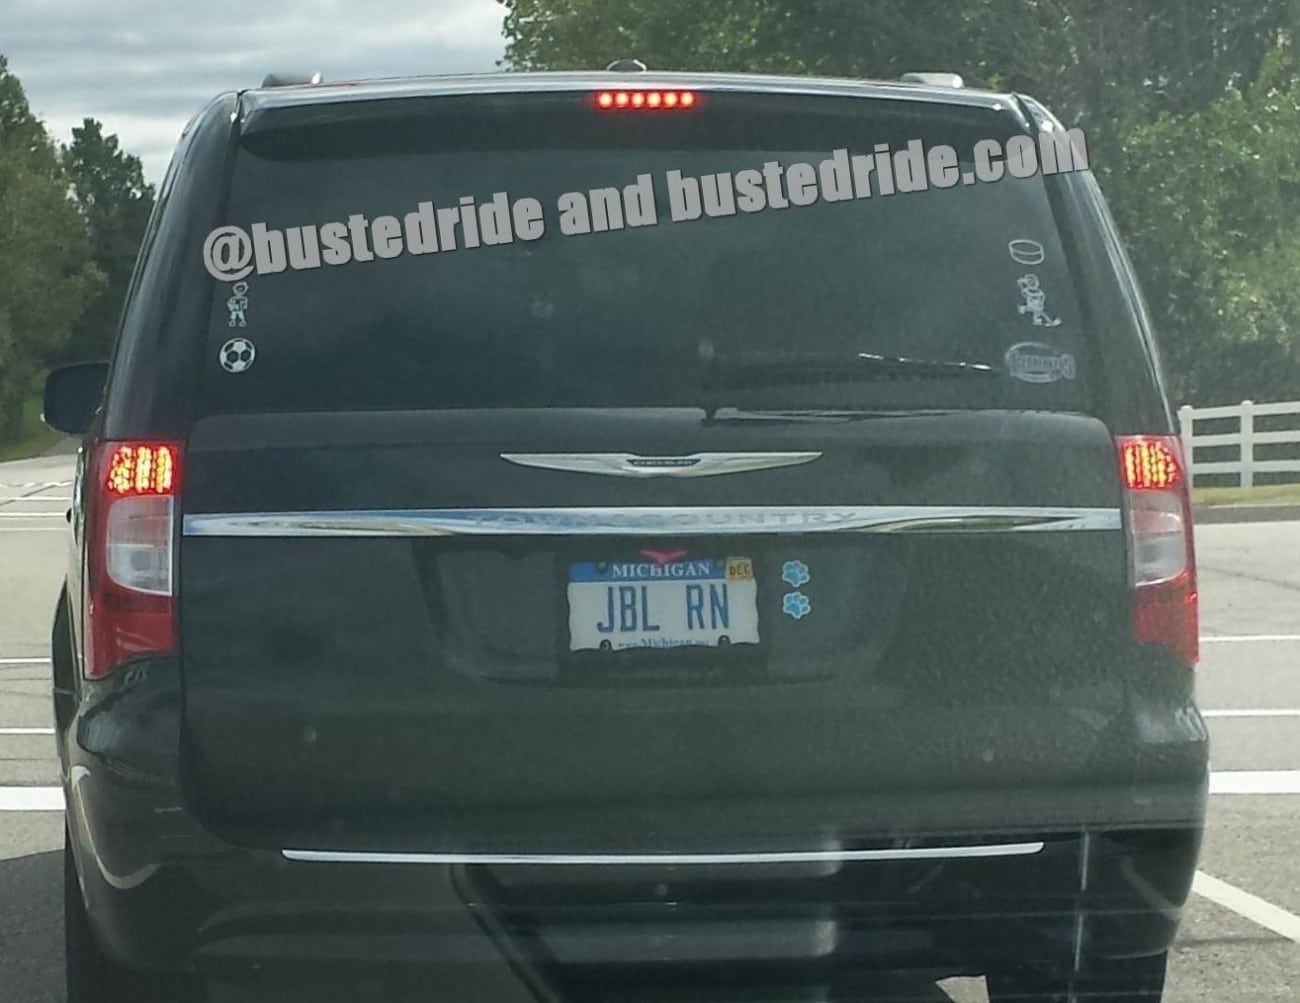 JBL RN - Vanity License Plate by Busted Ride